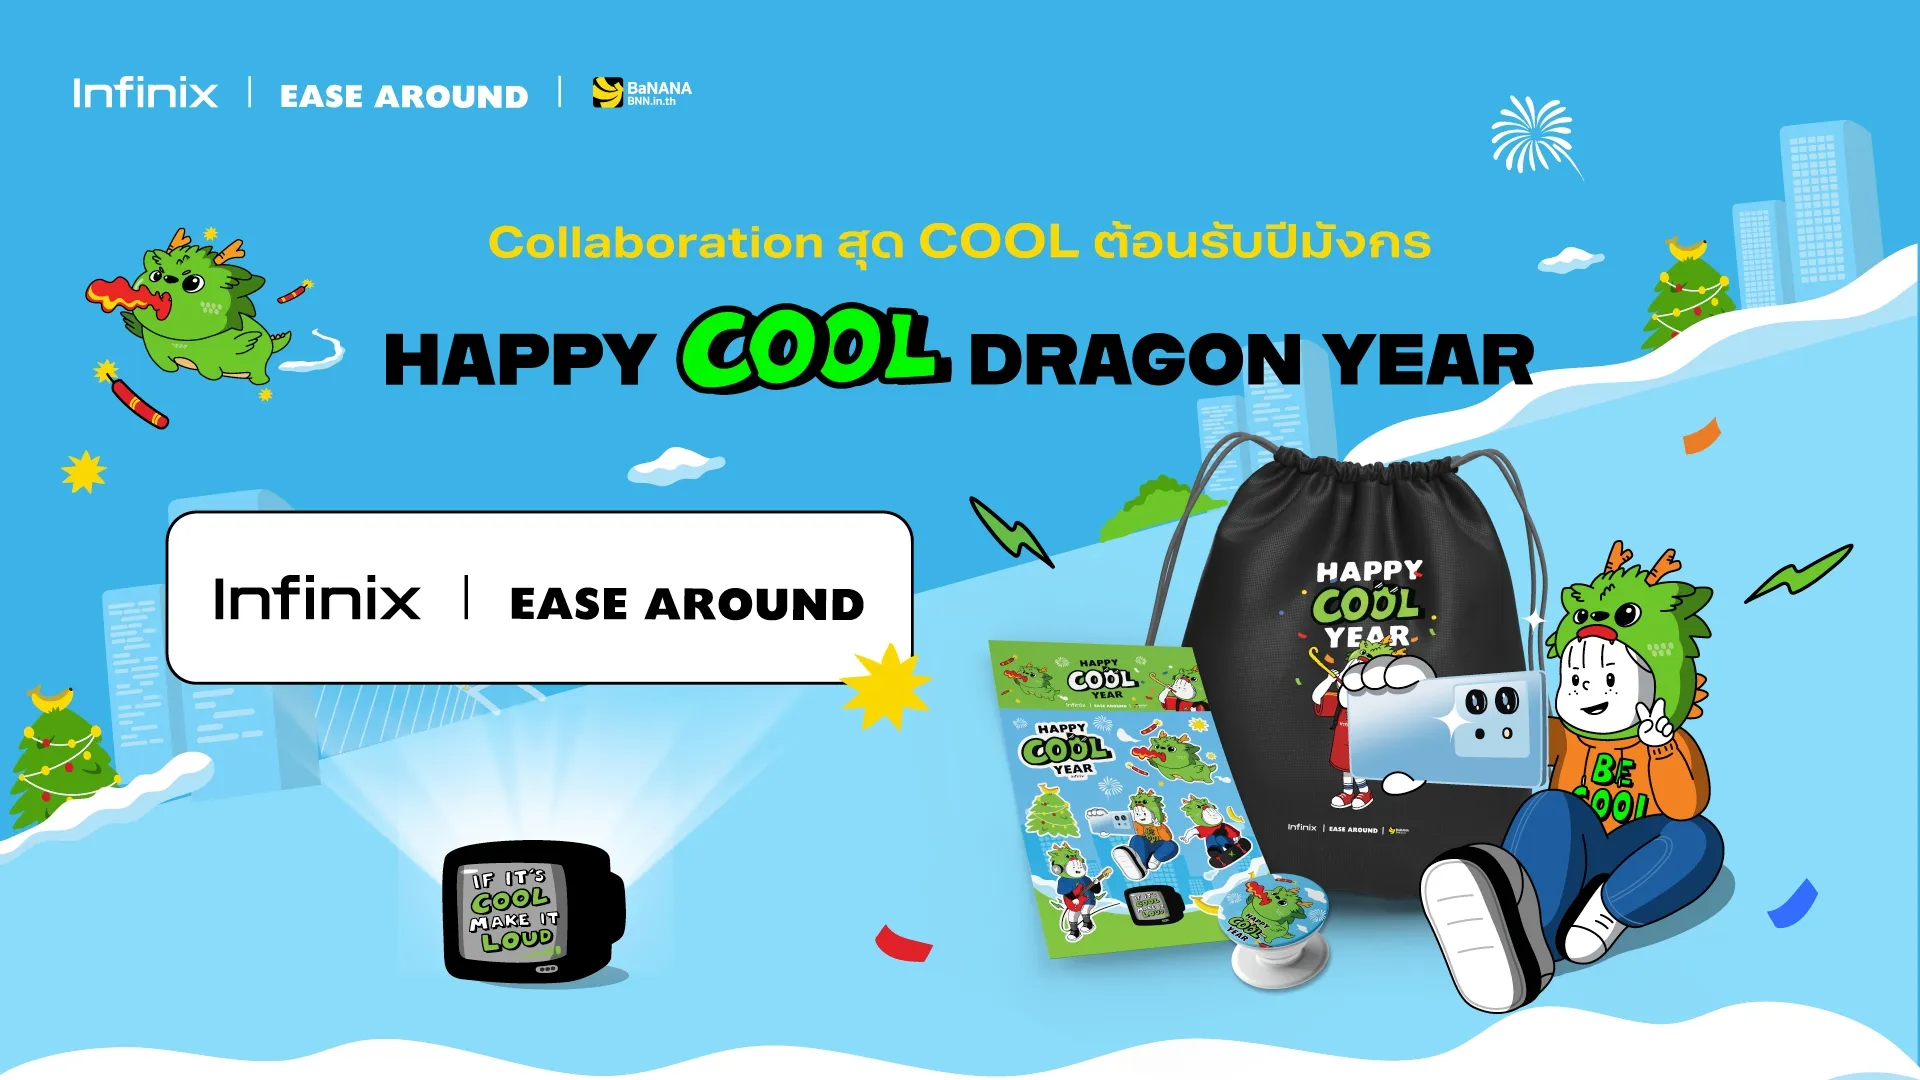 Infinix จับมือ Ease Around ครีเอทคอลเล็กชัน Happy Cool Dragon Yearพร้อมจัดโปรแรงมือถือรุ่นฮิต เริ่ม 23 ธ.ค.66 นี้!